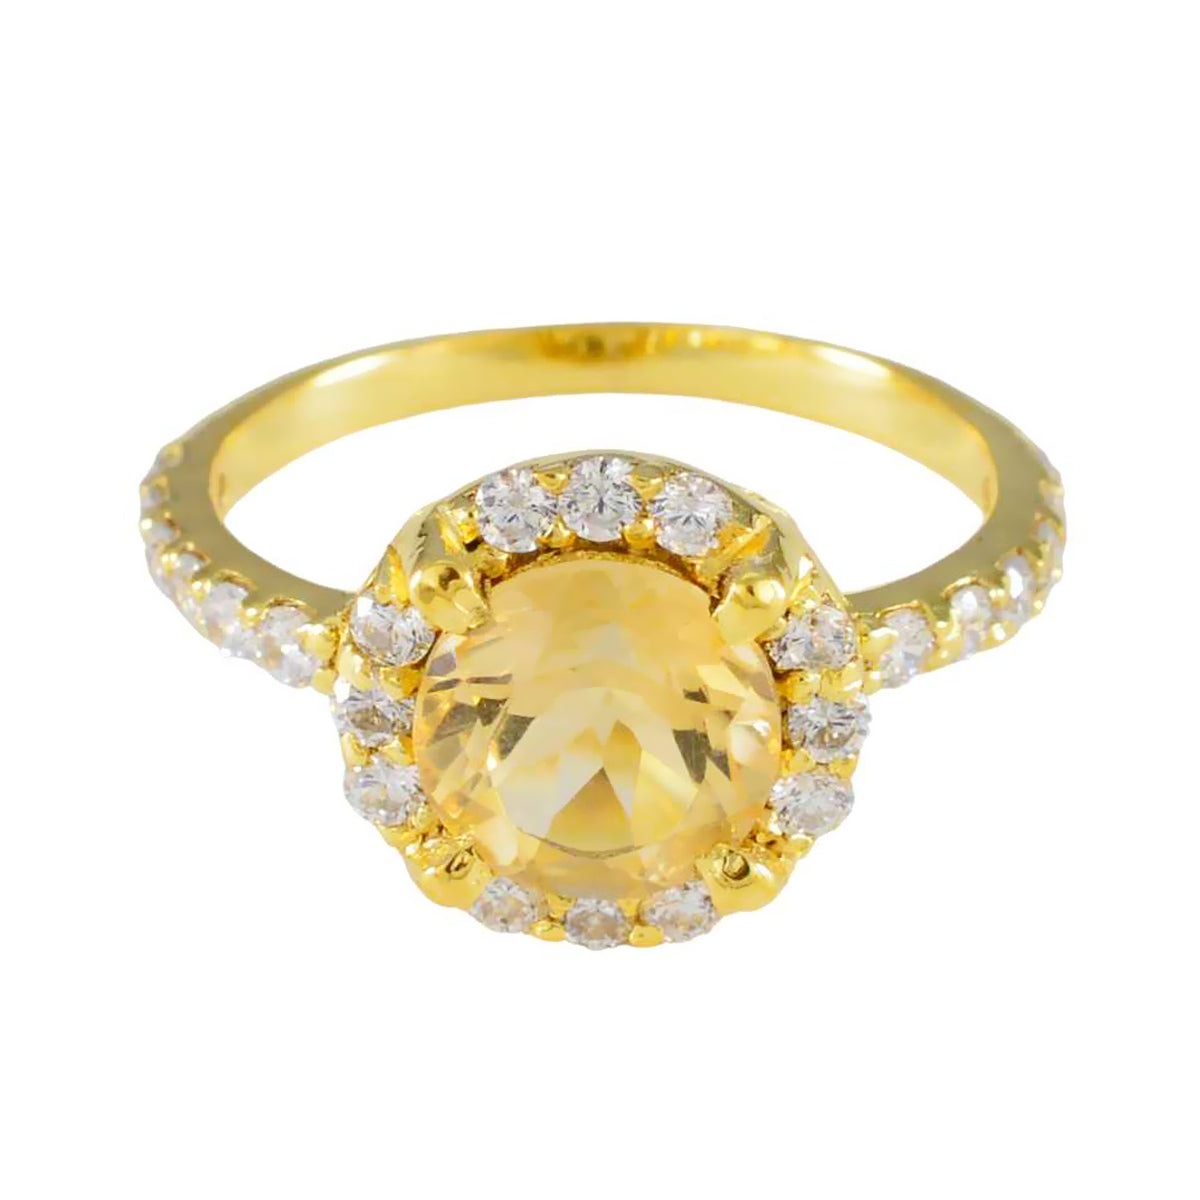 Riyo Bulk Silver Ring With Yellow Gold Plating Citrine Stone Oval Shape Prong Setting Stylish Jewelry Christmas Ring